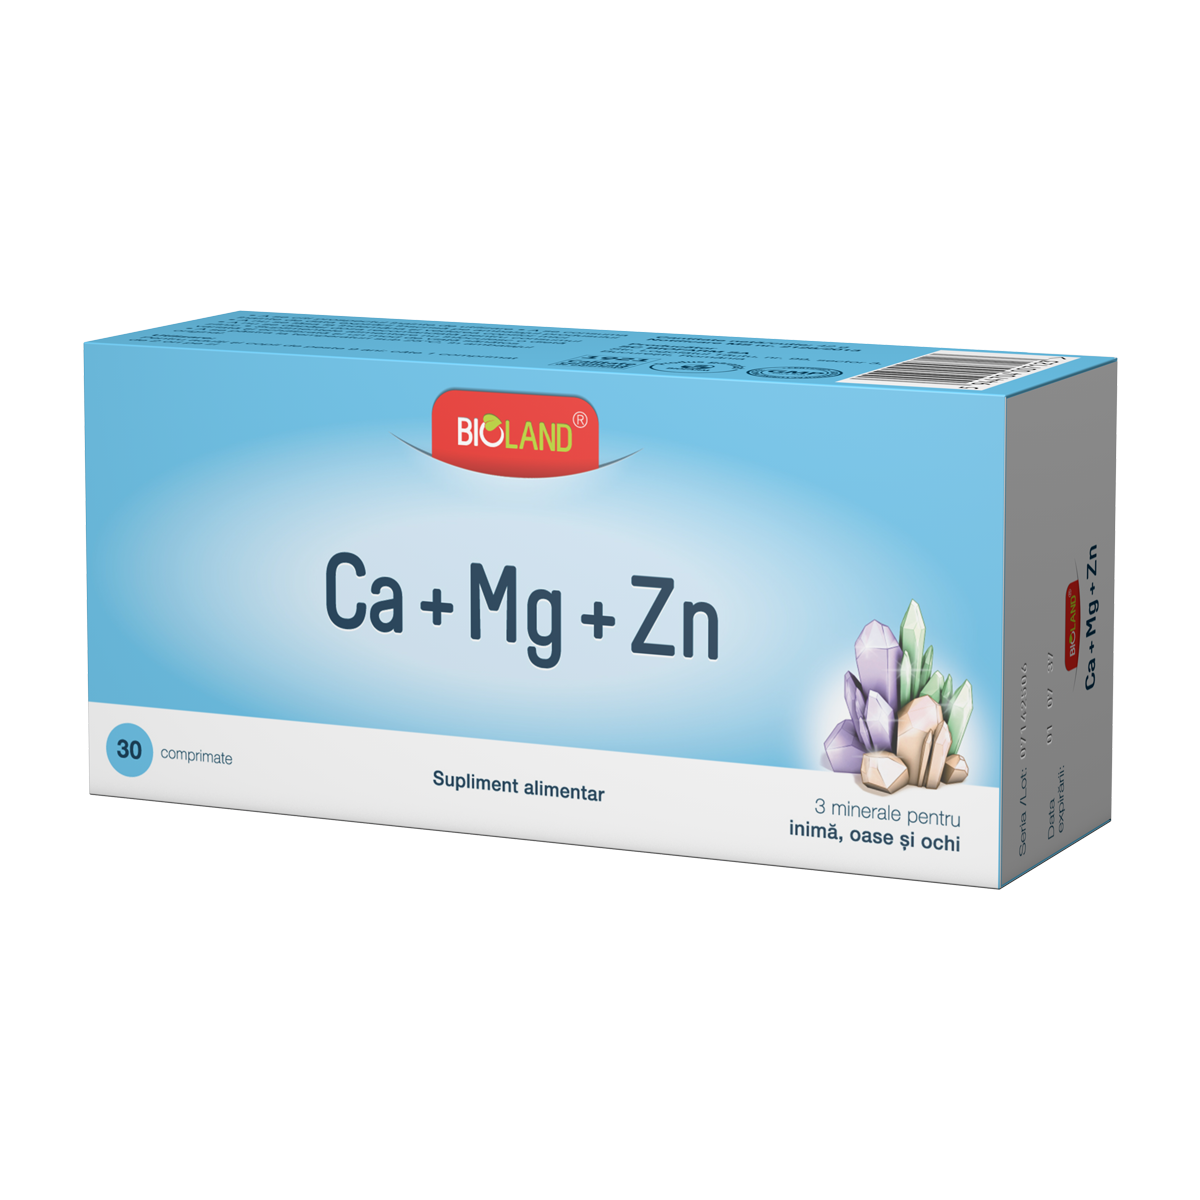 Uz general - Ca + Mg + Zn Bioland, 30 comprimate, Biofarm, sinapis.ro